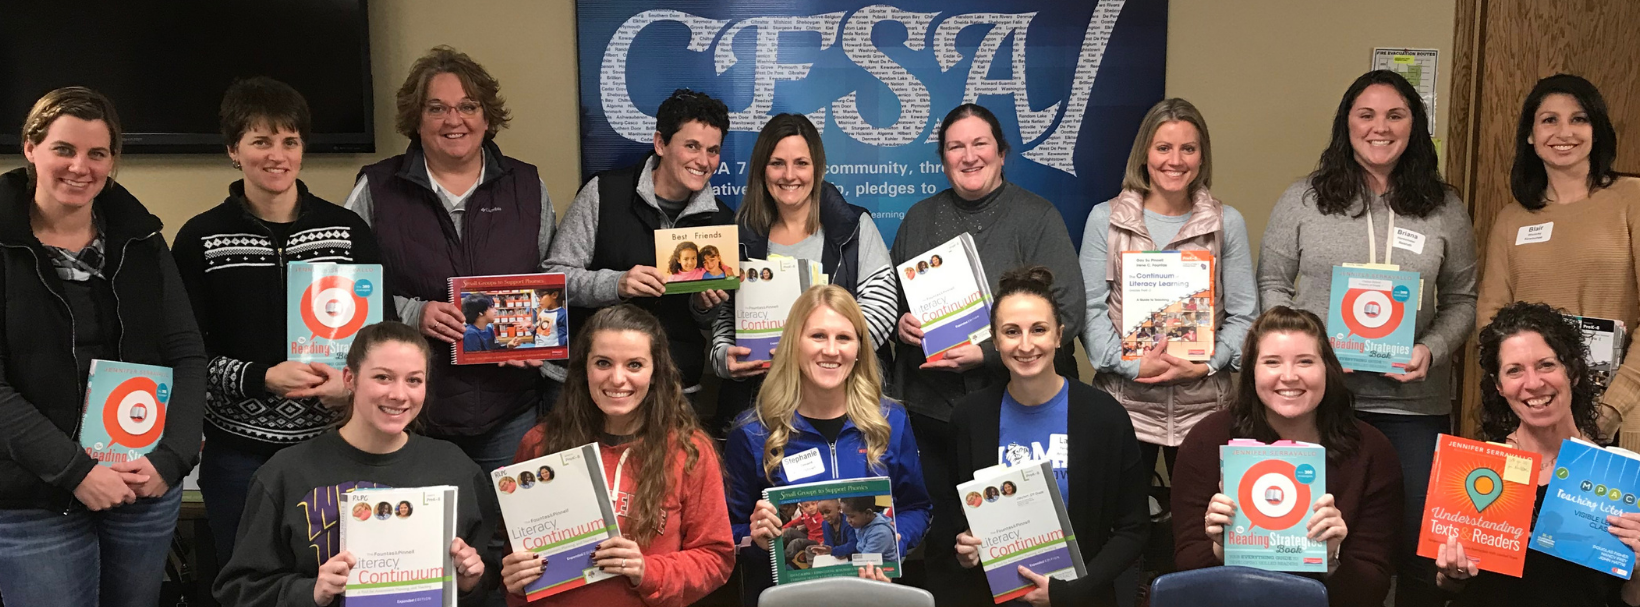 CESA 7 Professional Development Group Photo